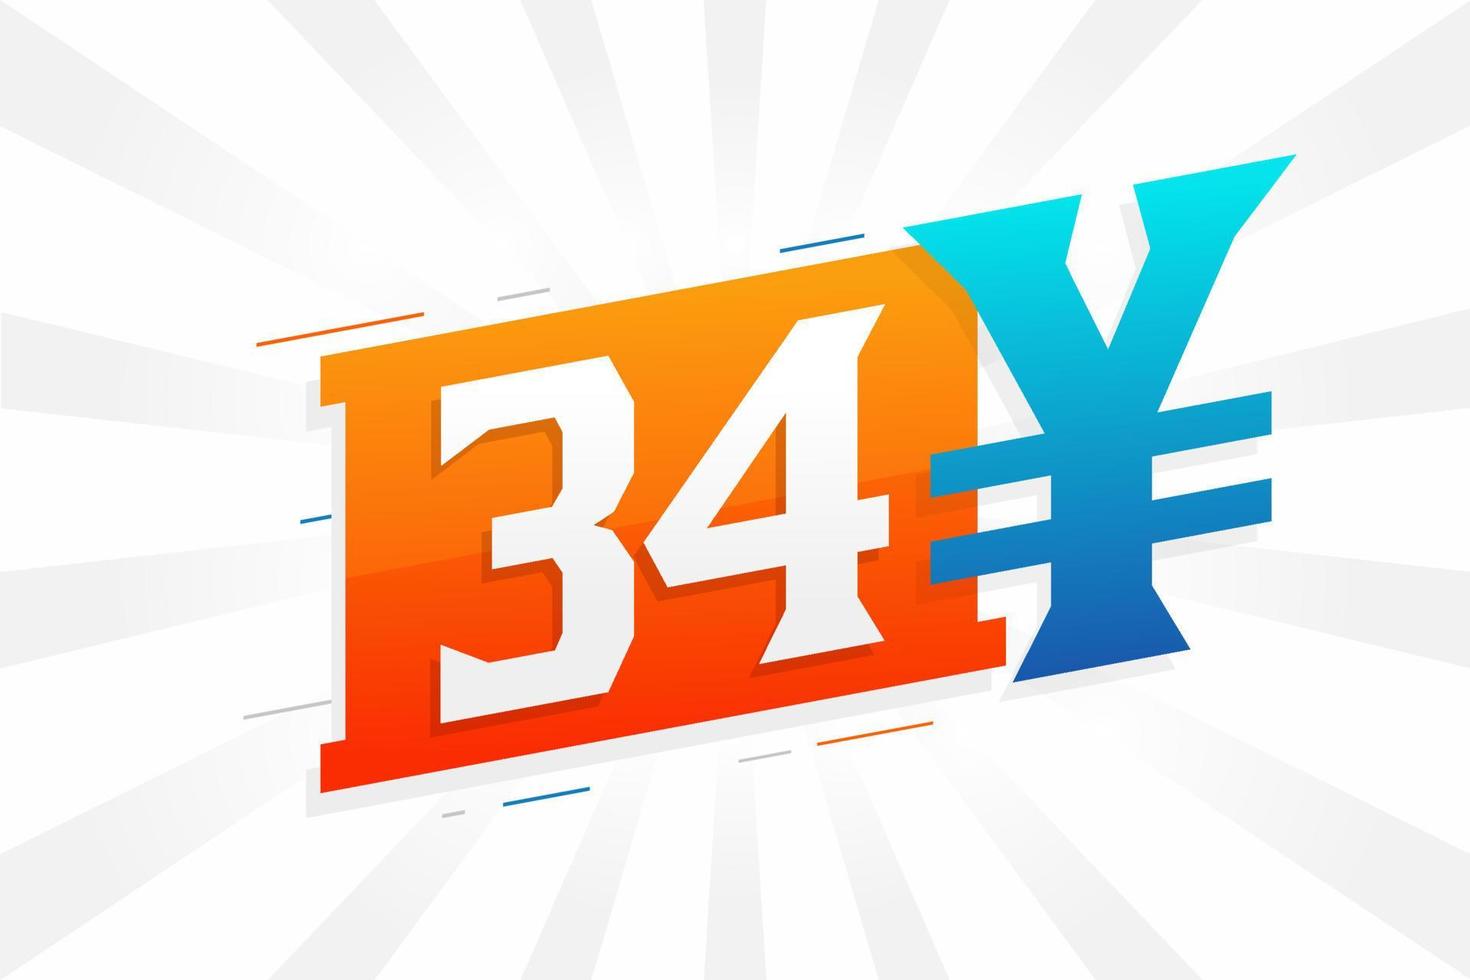 34 yuan Cinese moneta vettore testo simbolo. 34 yen giapponese moneta i soldi azione vettore